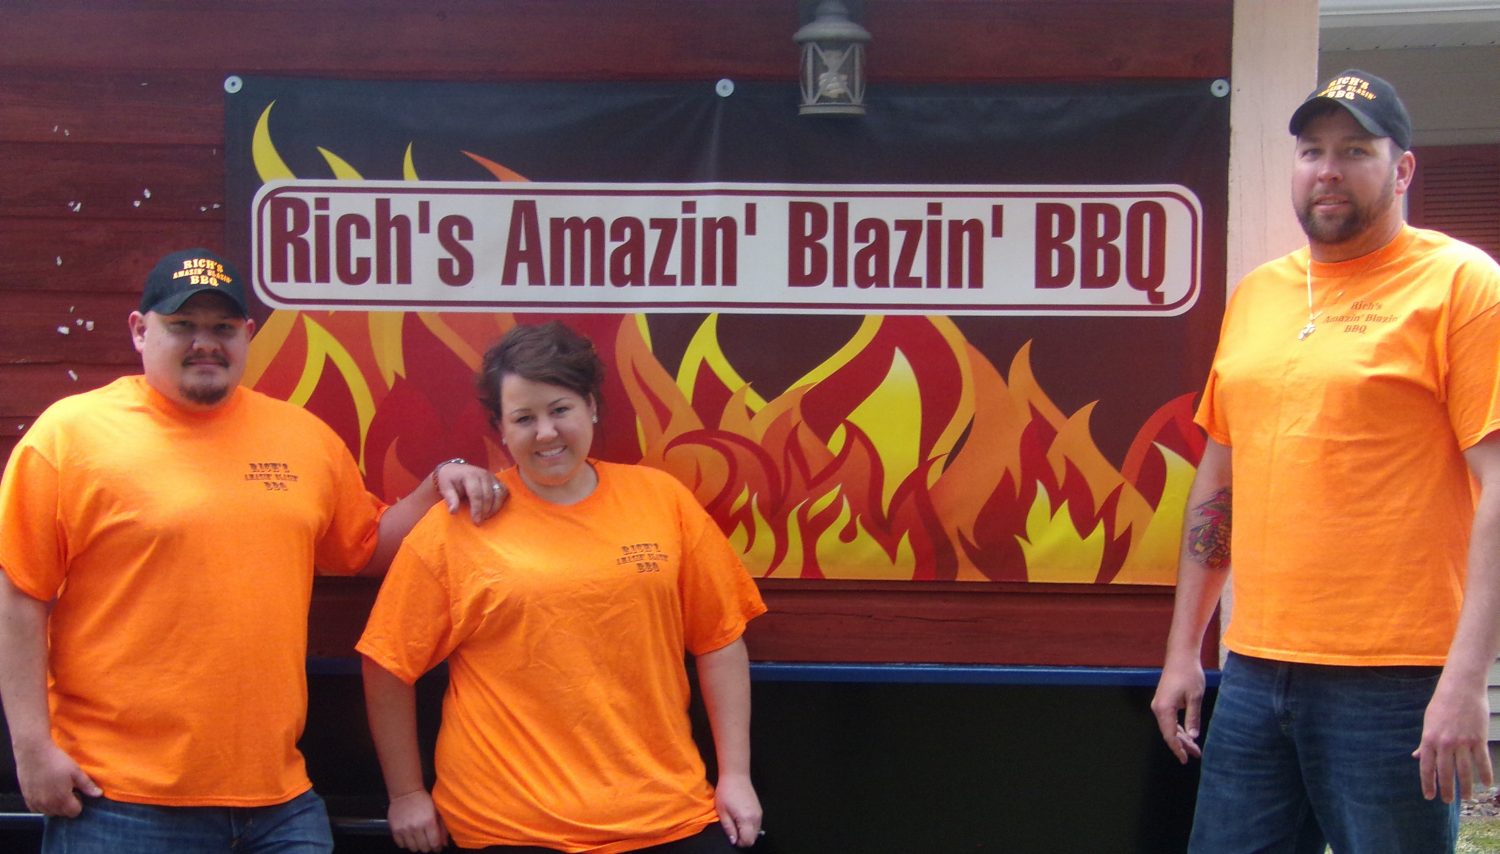 Local BBQ crew Blazin’ into another Amazin’ season